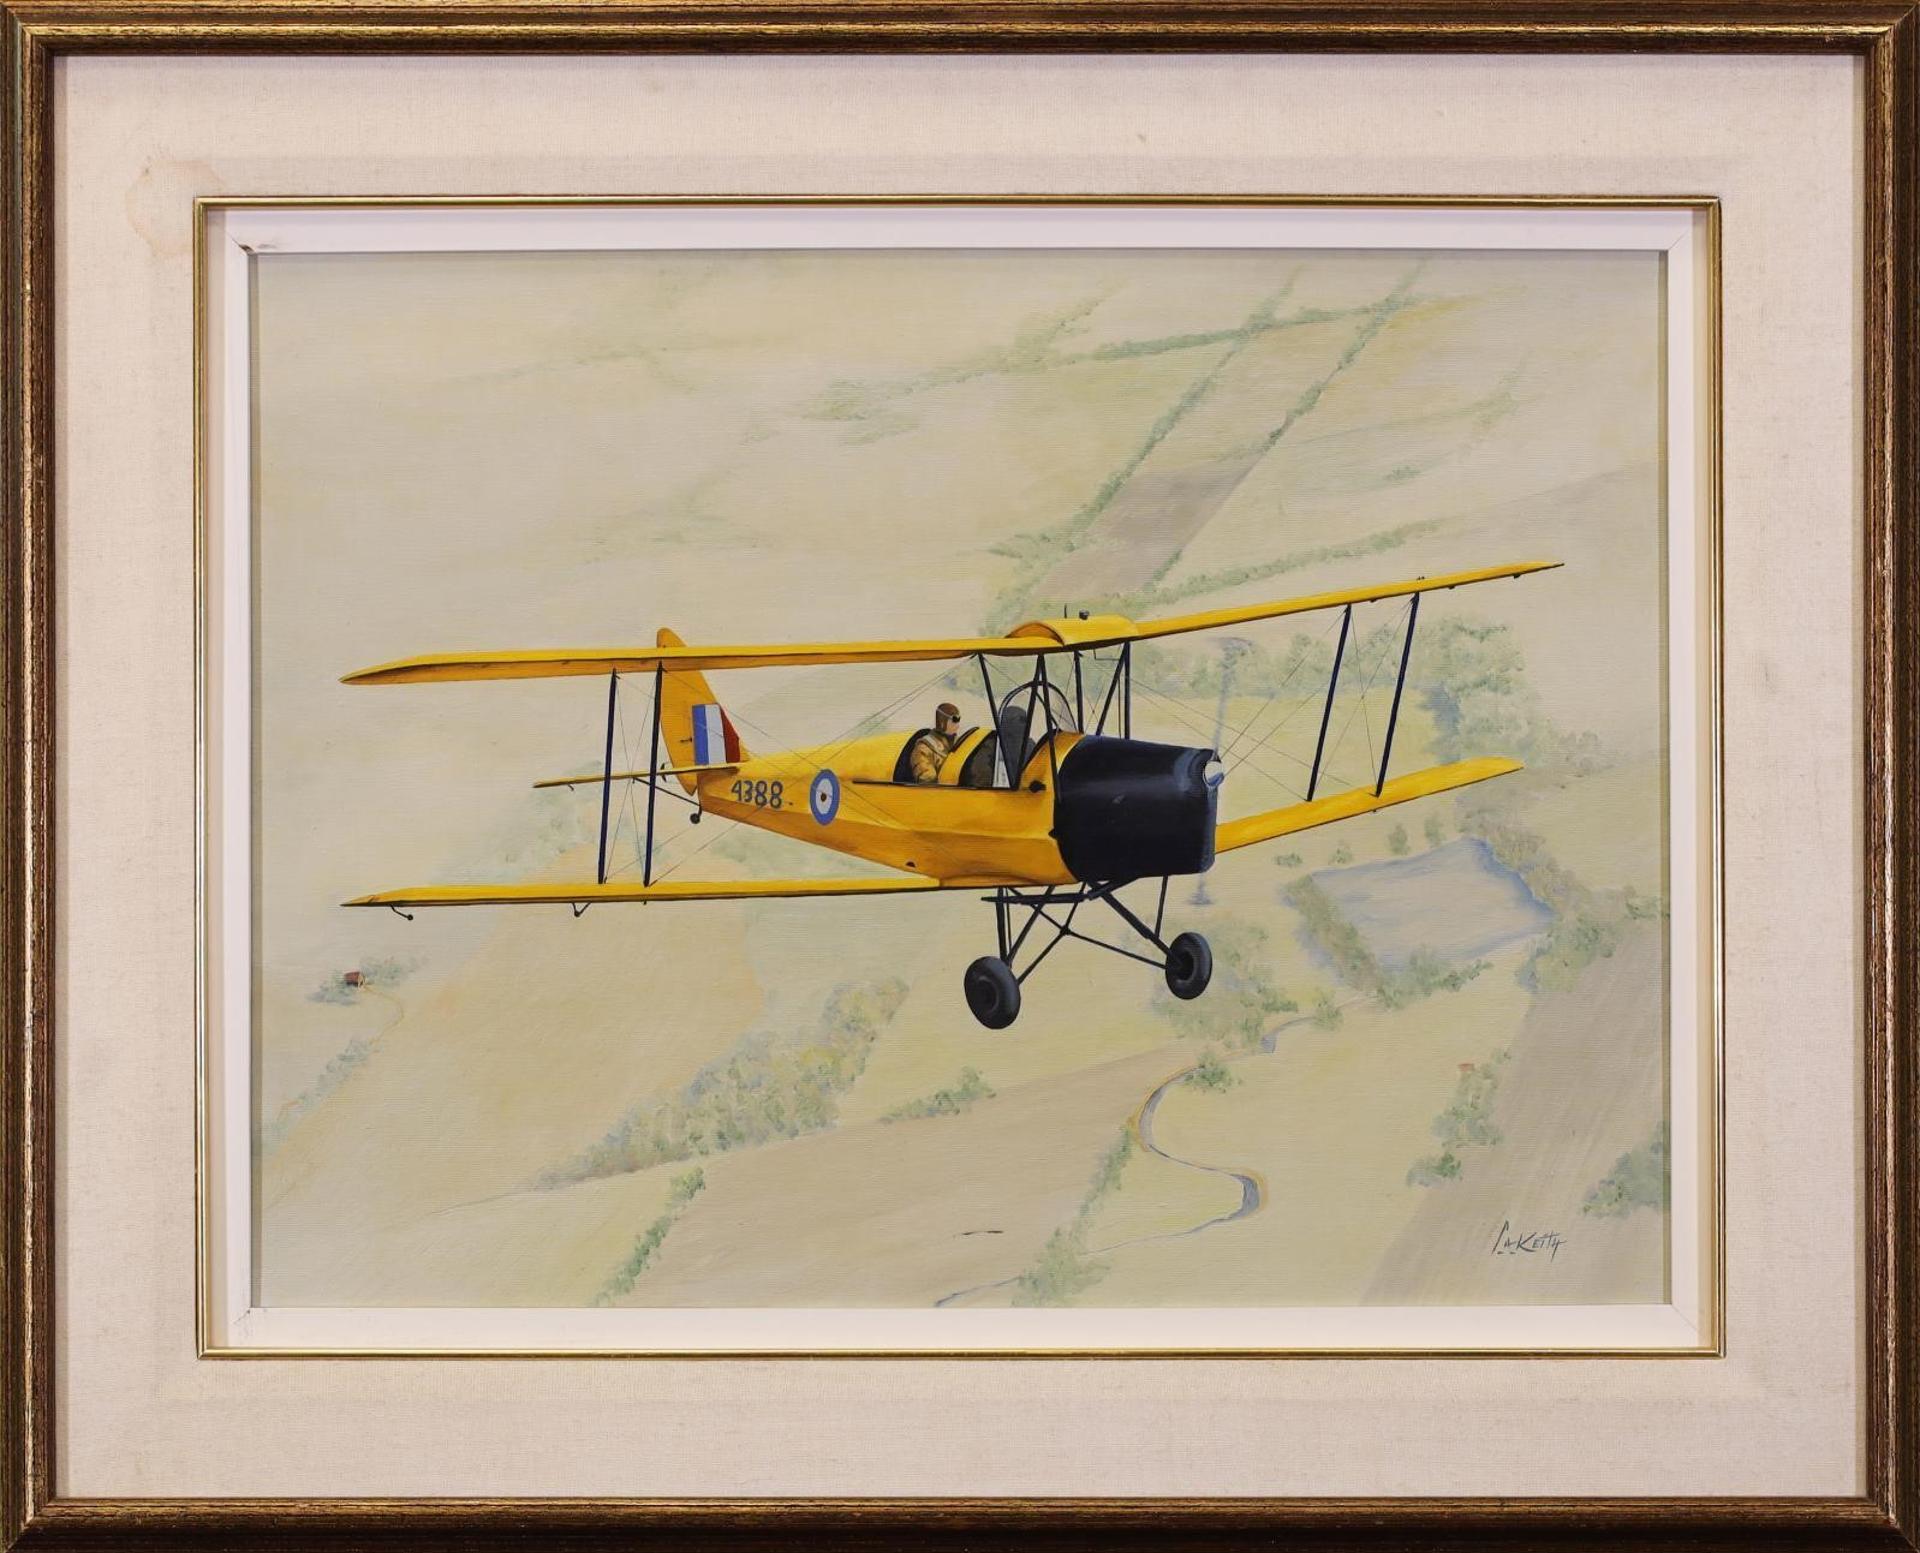 L.A. Keith - “DeHavilland DH82, RCAF, Primary Trainer, Empire Air Training Scheme, 1940-45”